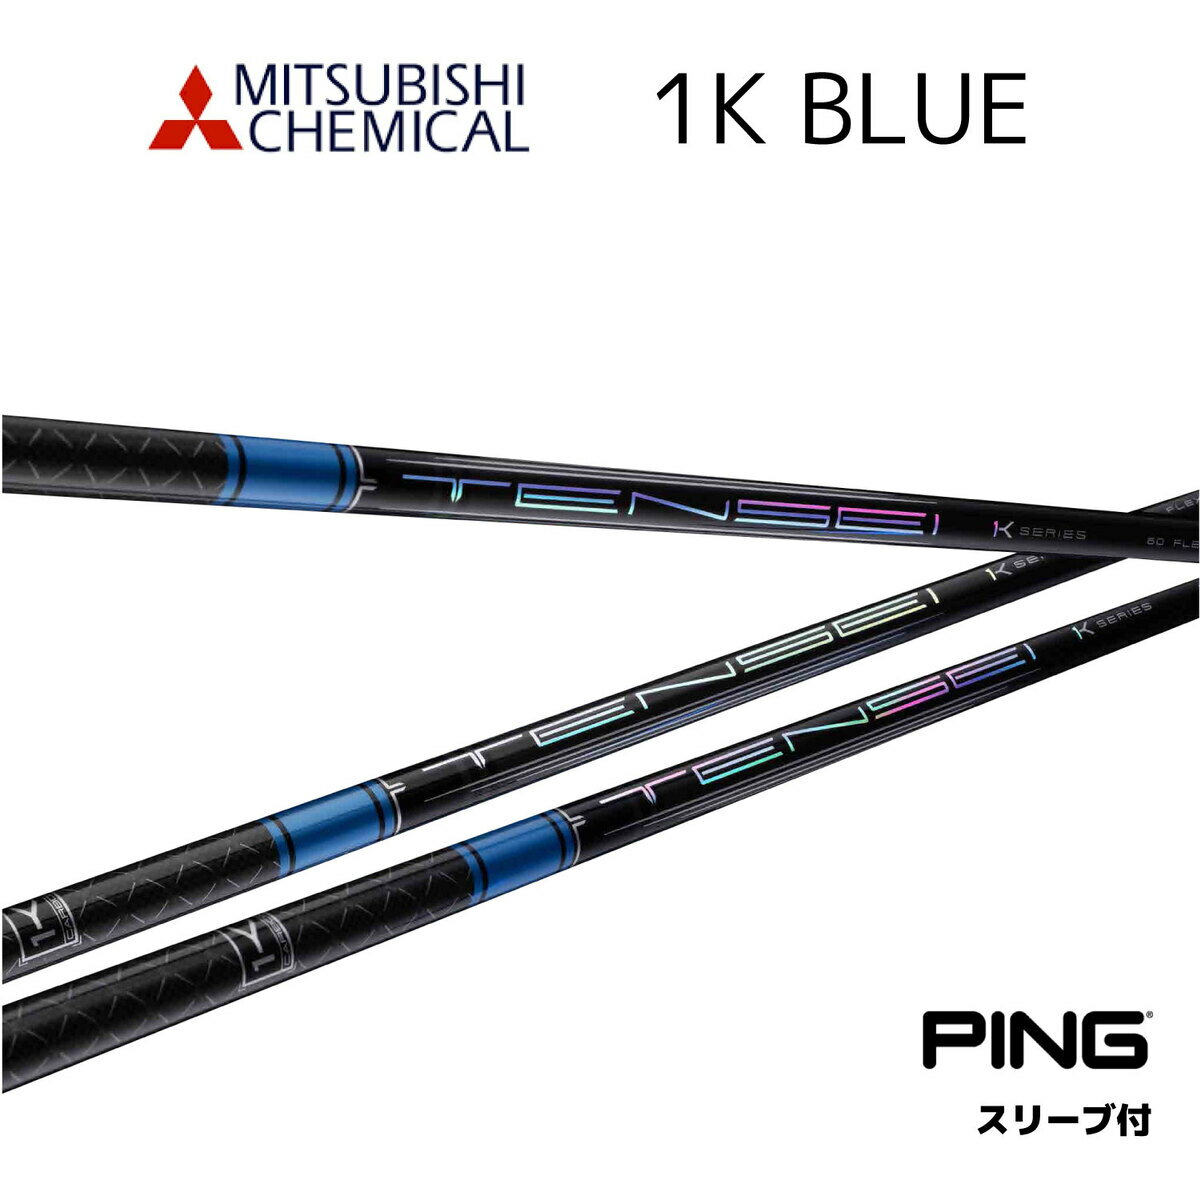 TENSEI Pro Blue 1K ピン PING スリーブ付シャフト 三菱ケミカル シャフト テンセイ 1K ブルー bend福岡 ベンド福岡